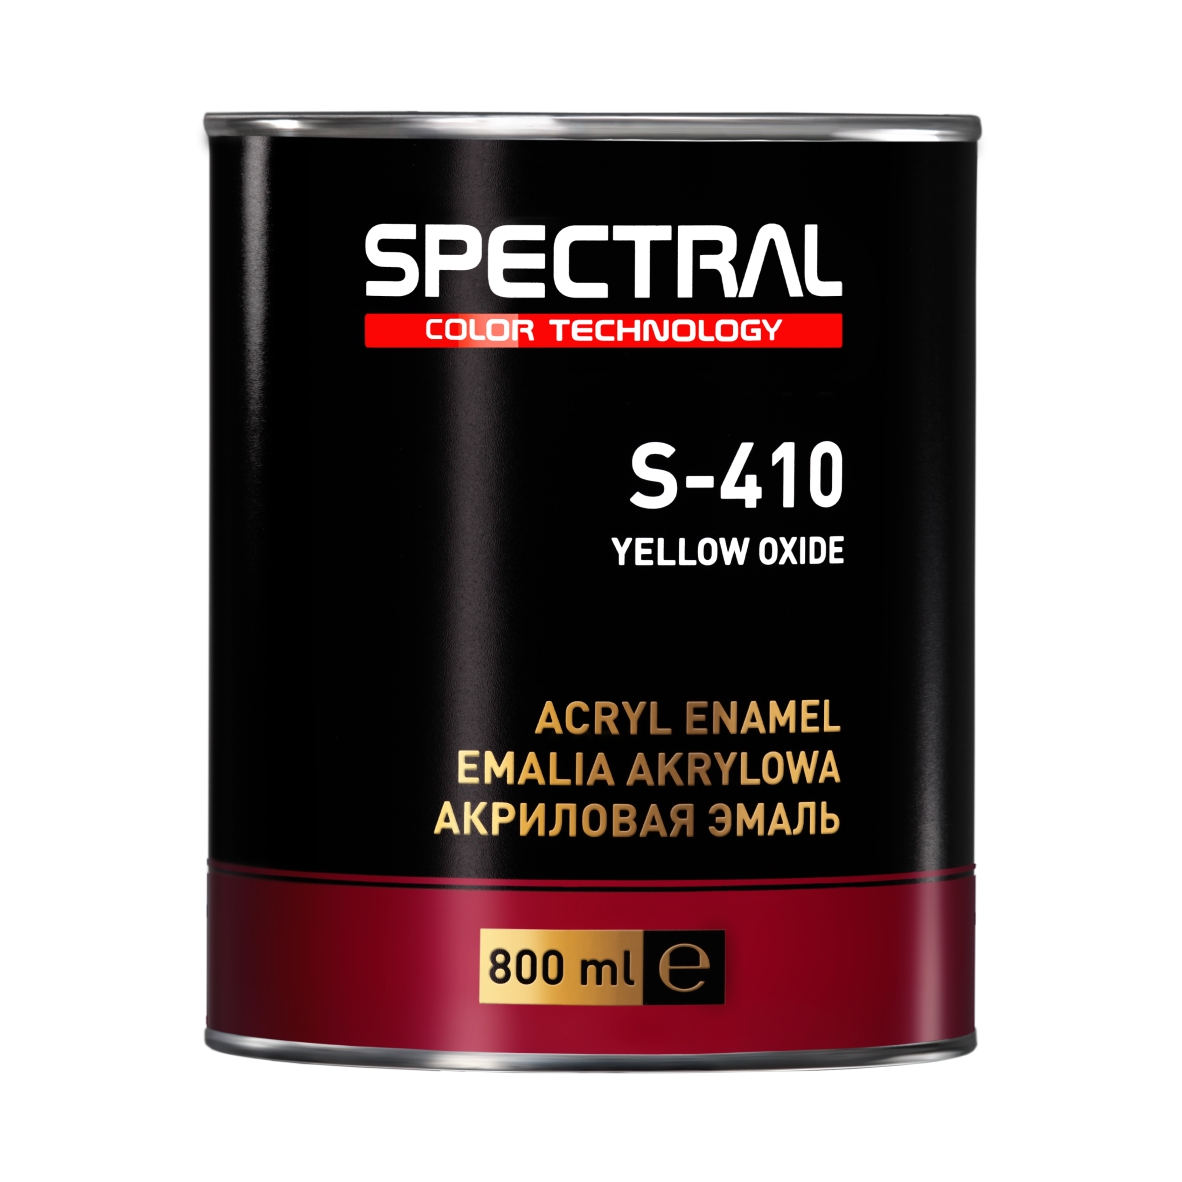 Spectral 2K